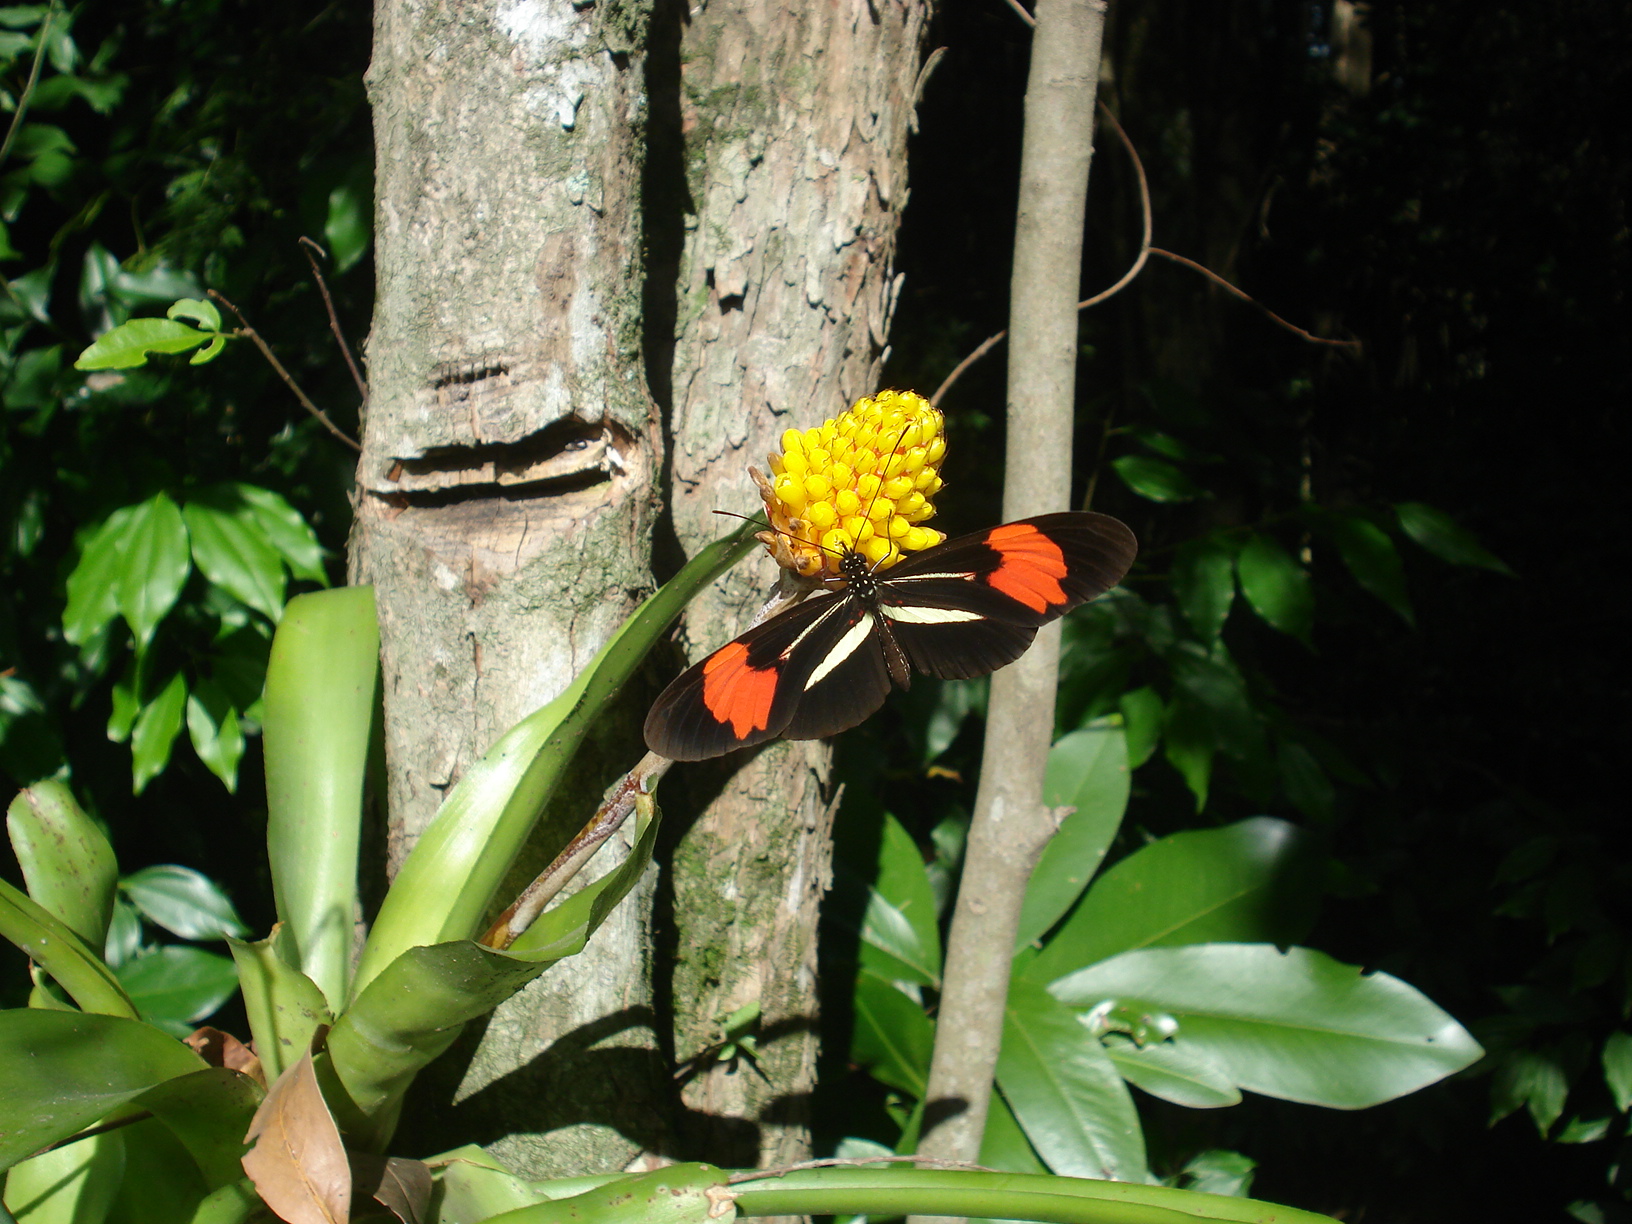 File:Borboleta na flor da bromélia.jpg - Wikimedia Commons